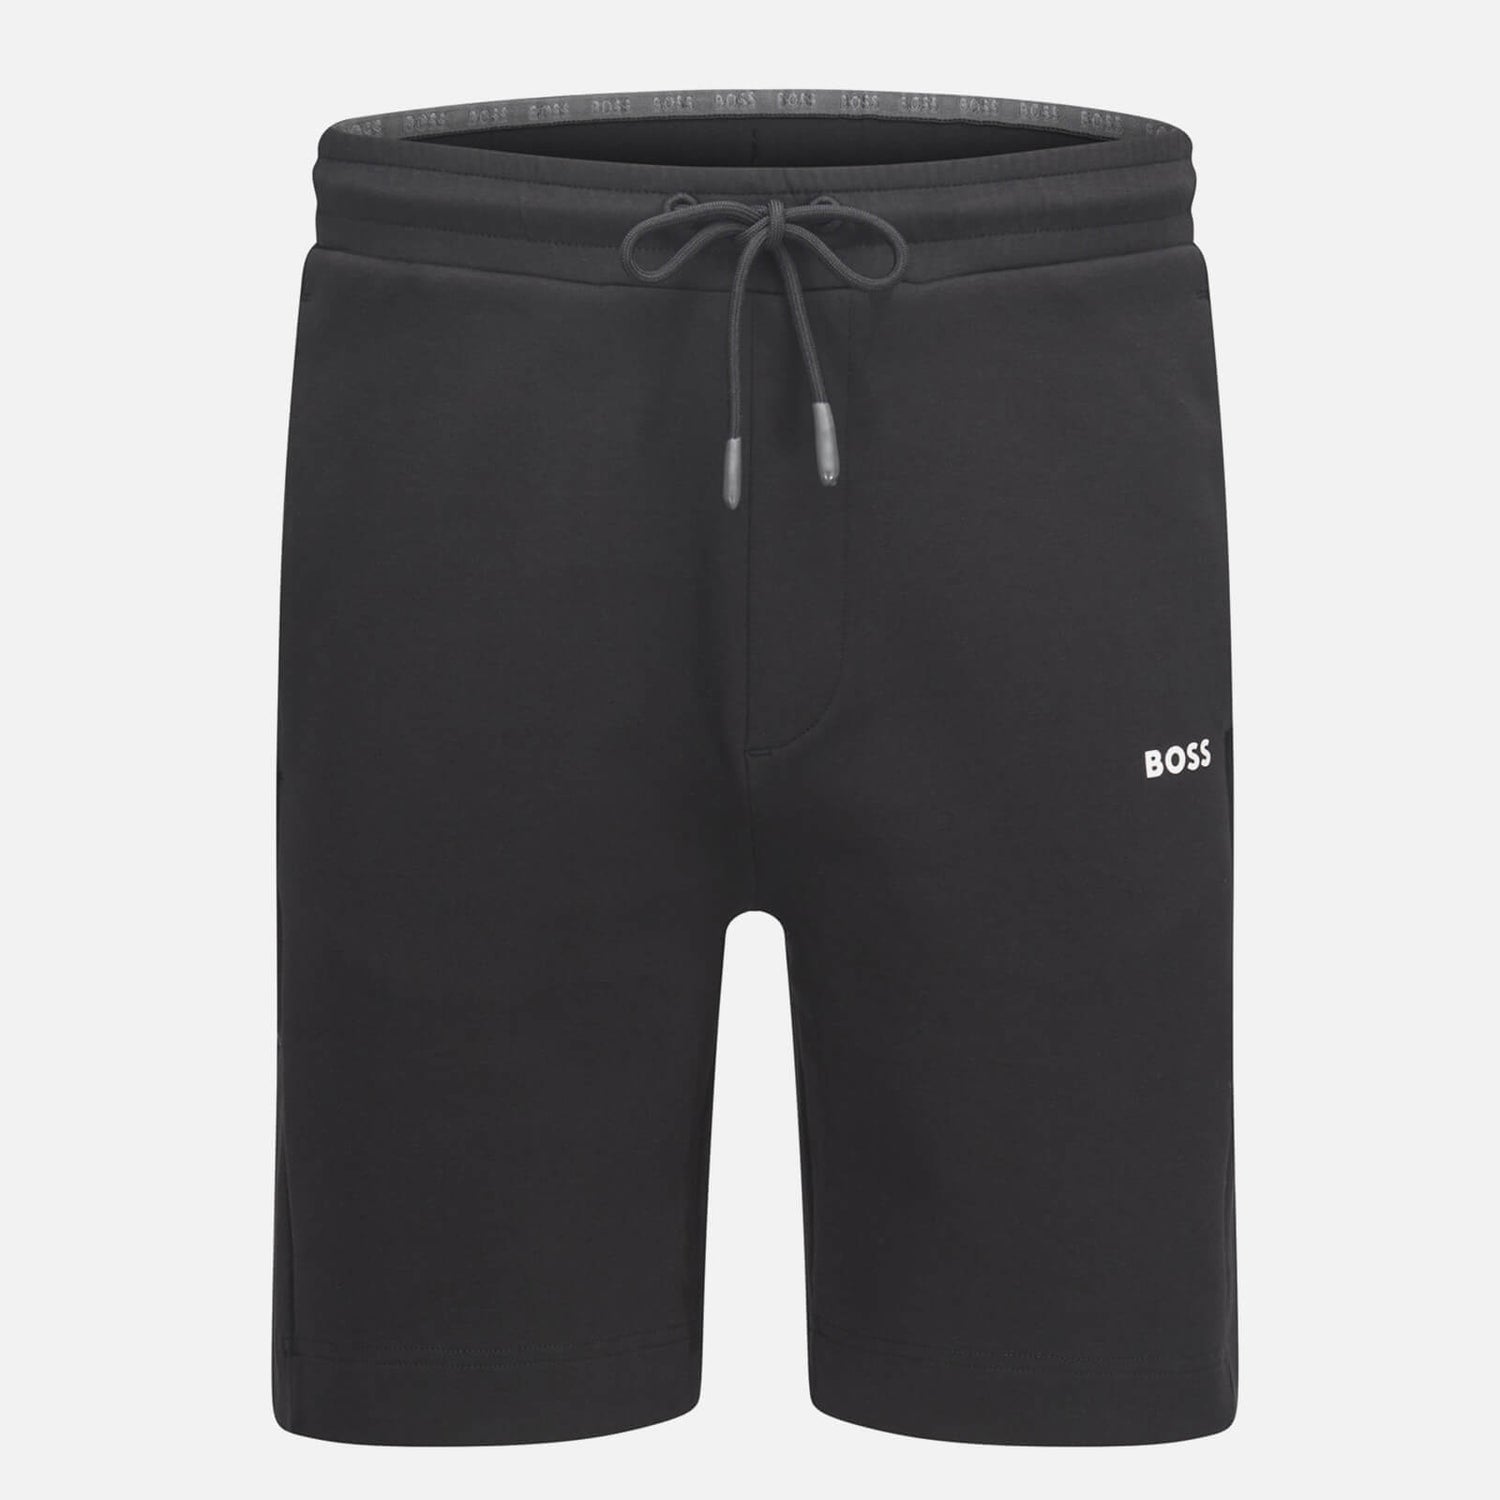 BOSS Athleisure Men's Headlo 1 Sweat Shorts - Black - S